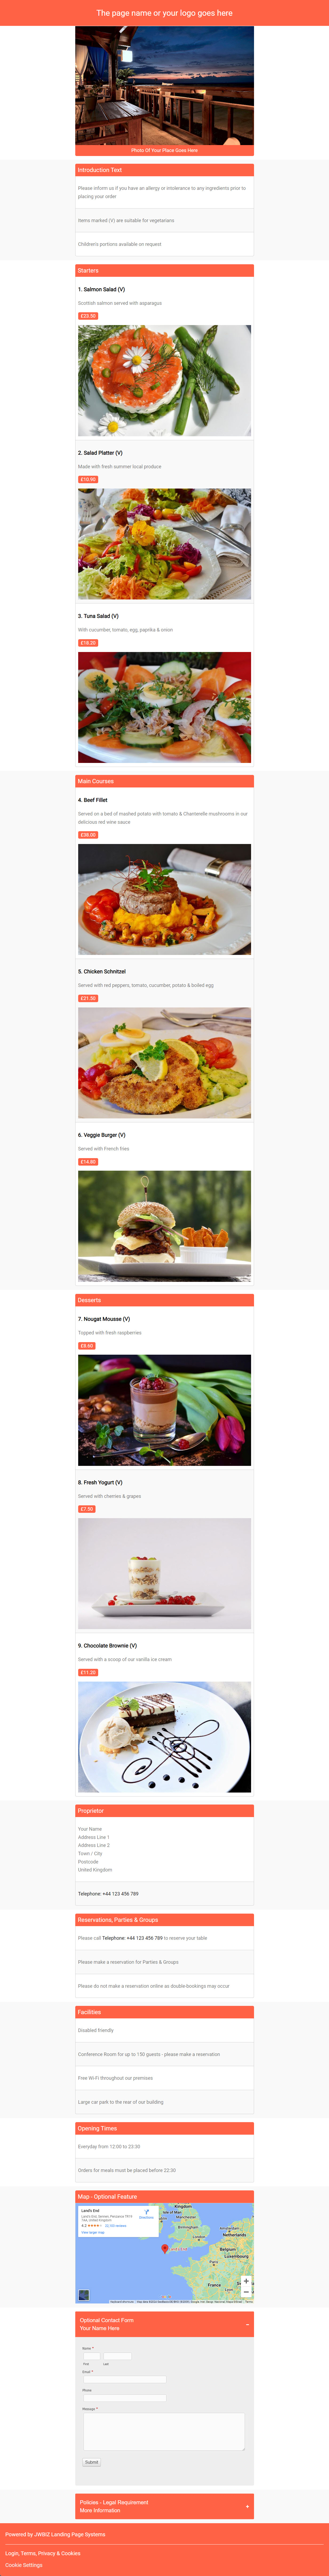 JWBIZ.COM Food & Drink Menus Landing Page example large screen view.